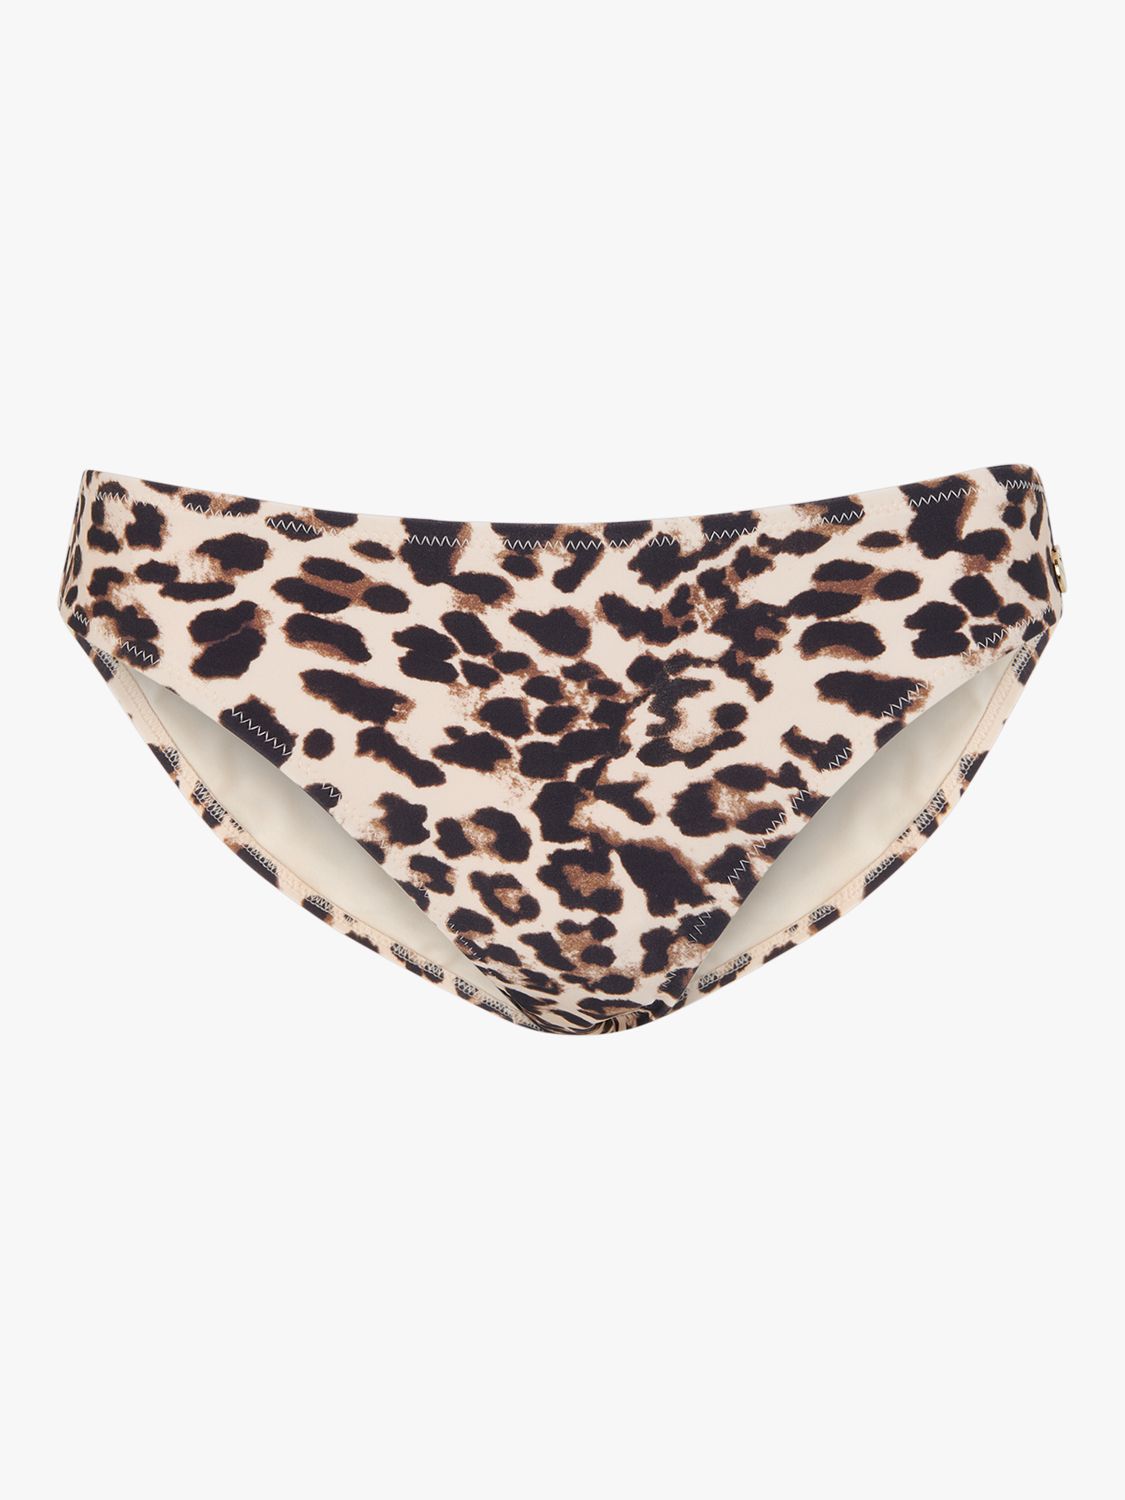 Whistles Animal Print Bikini Bottom, Leopard Print, 6